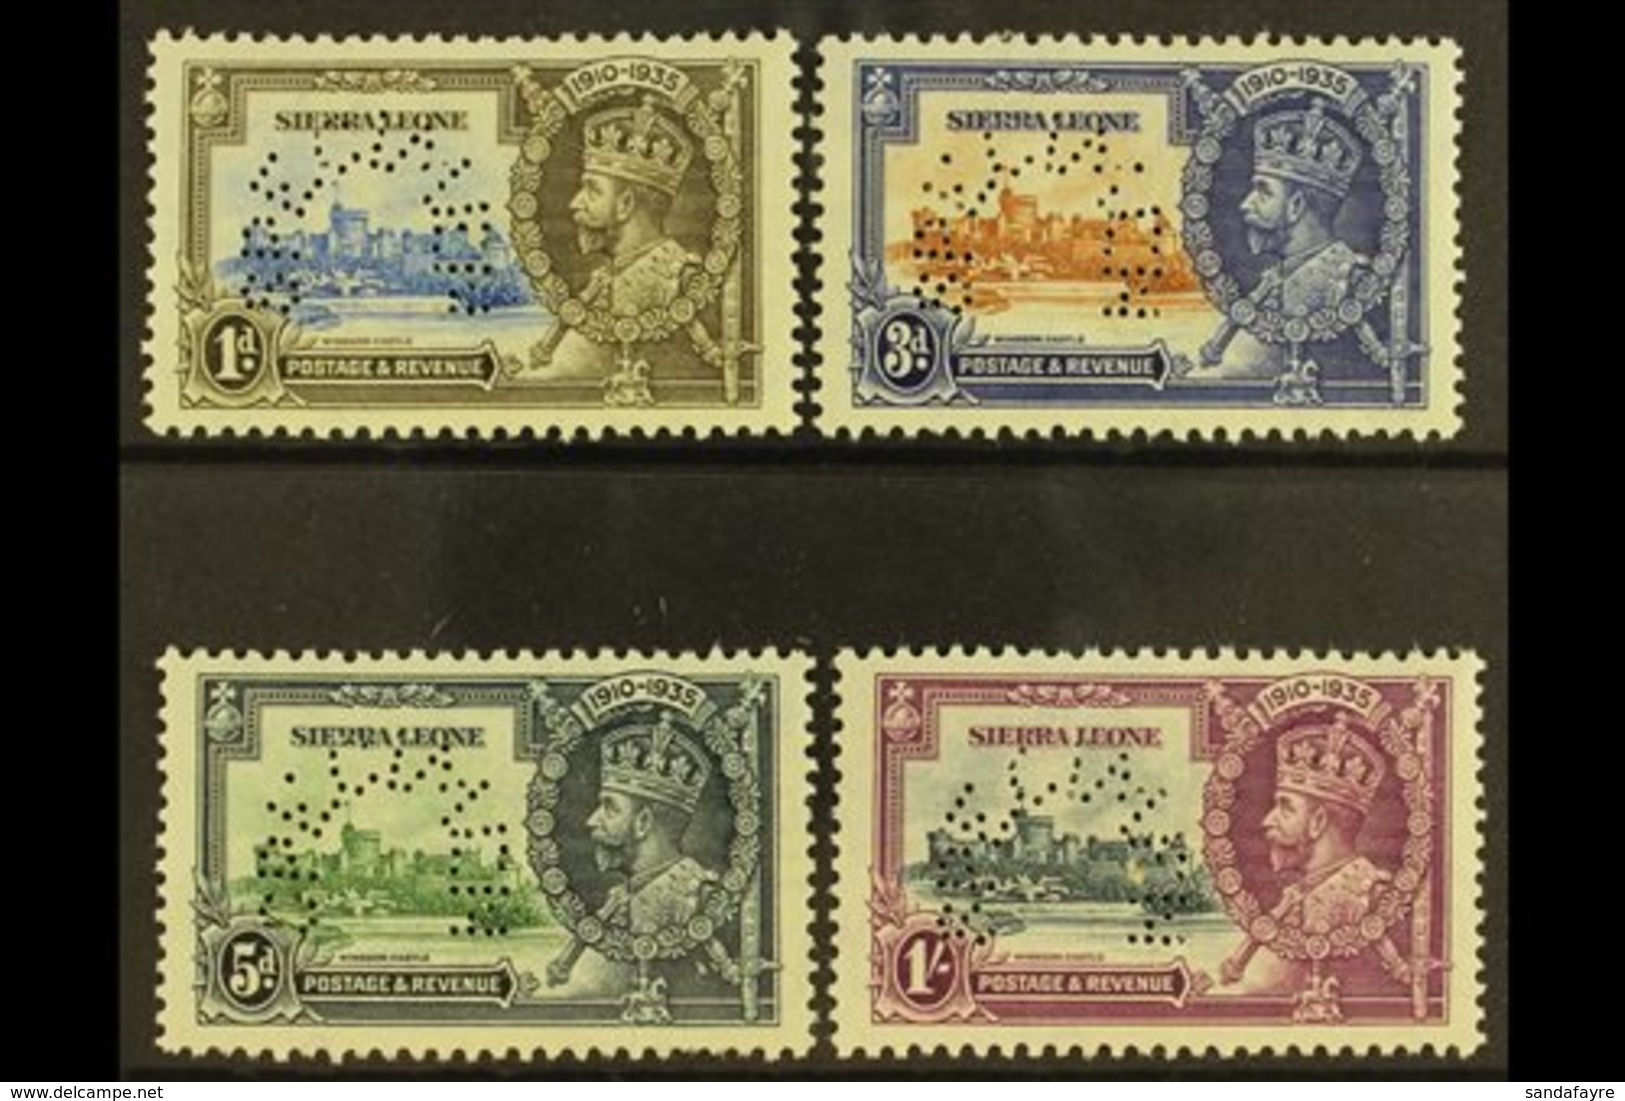 1935  Silver Jubilee Set Complete, Perforated "Specimen", SG 181s/4s, Very Fine Mint Large Part Og. (4 Stamps) For More  - Sierra Leone (...-1960)